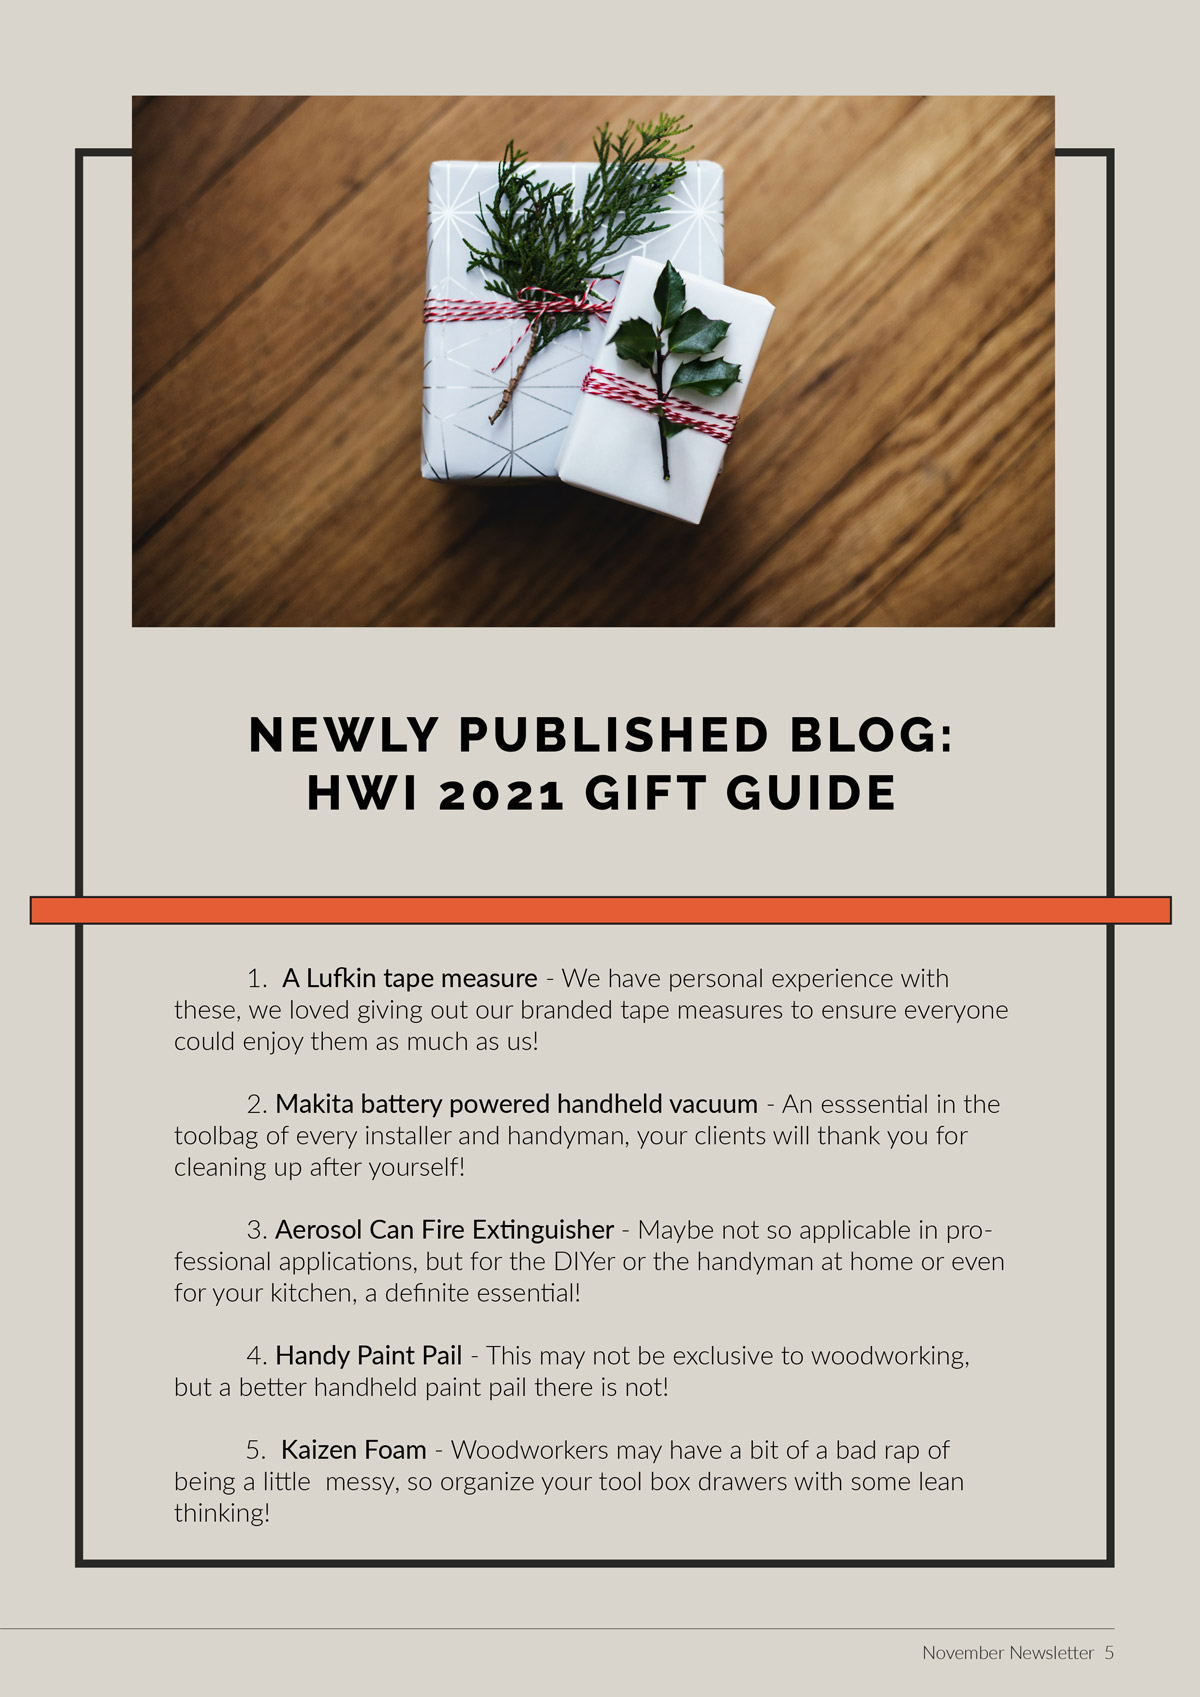 Newly published blog: HWI 2021 gift guide.